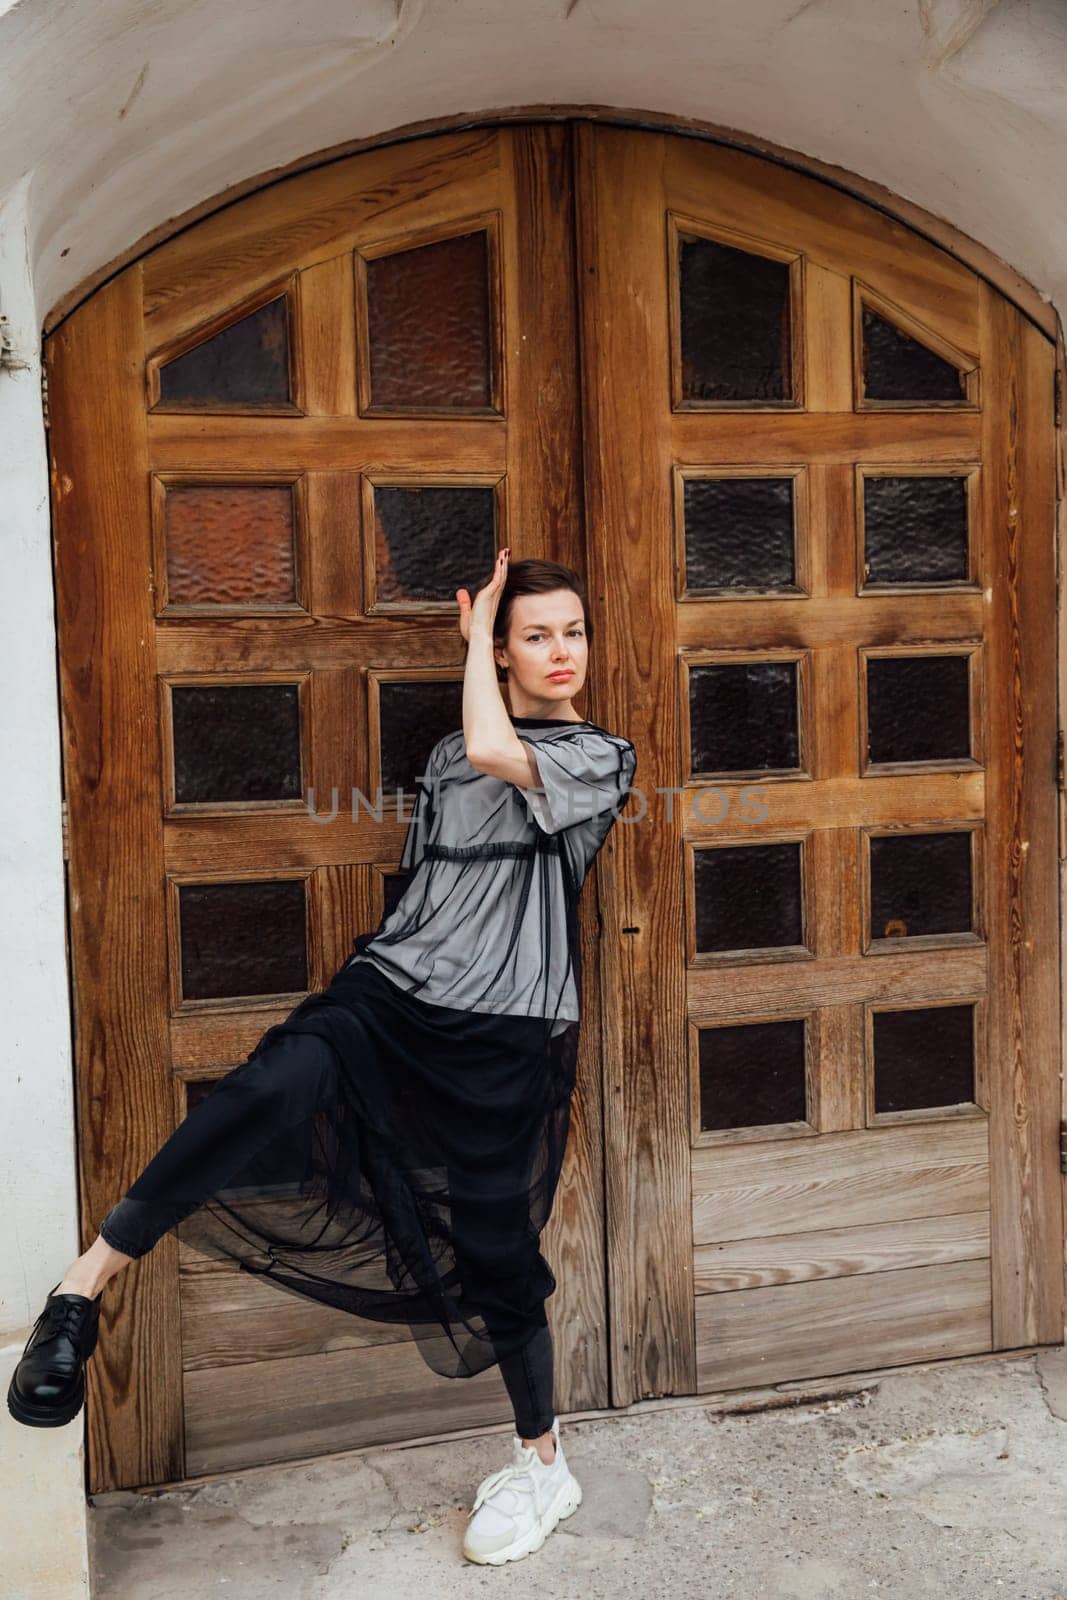 Slender fashionable woman walking outdoors by Simakov